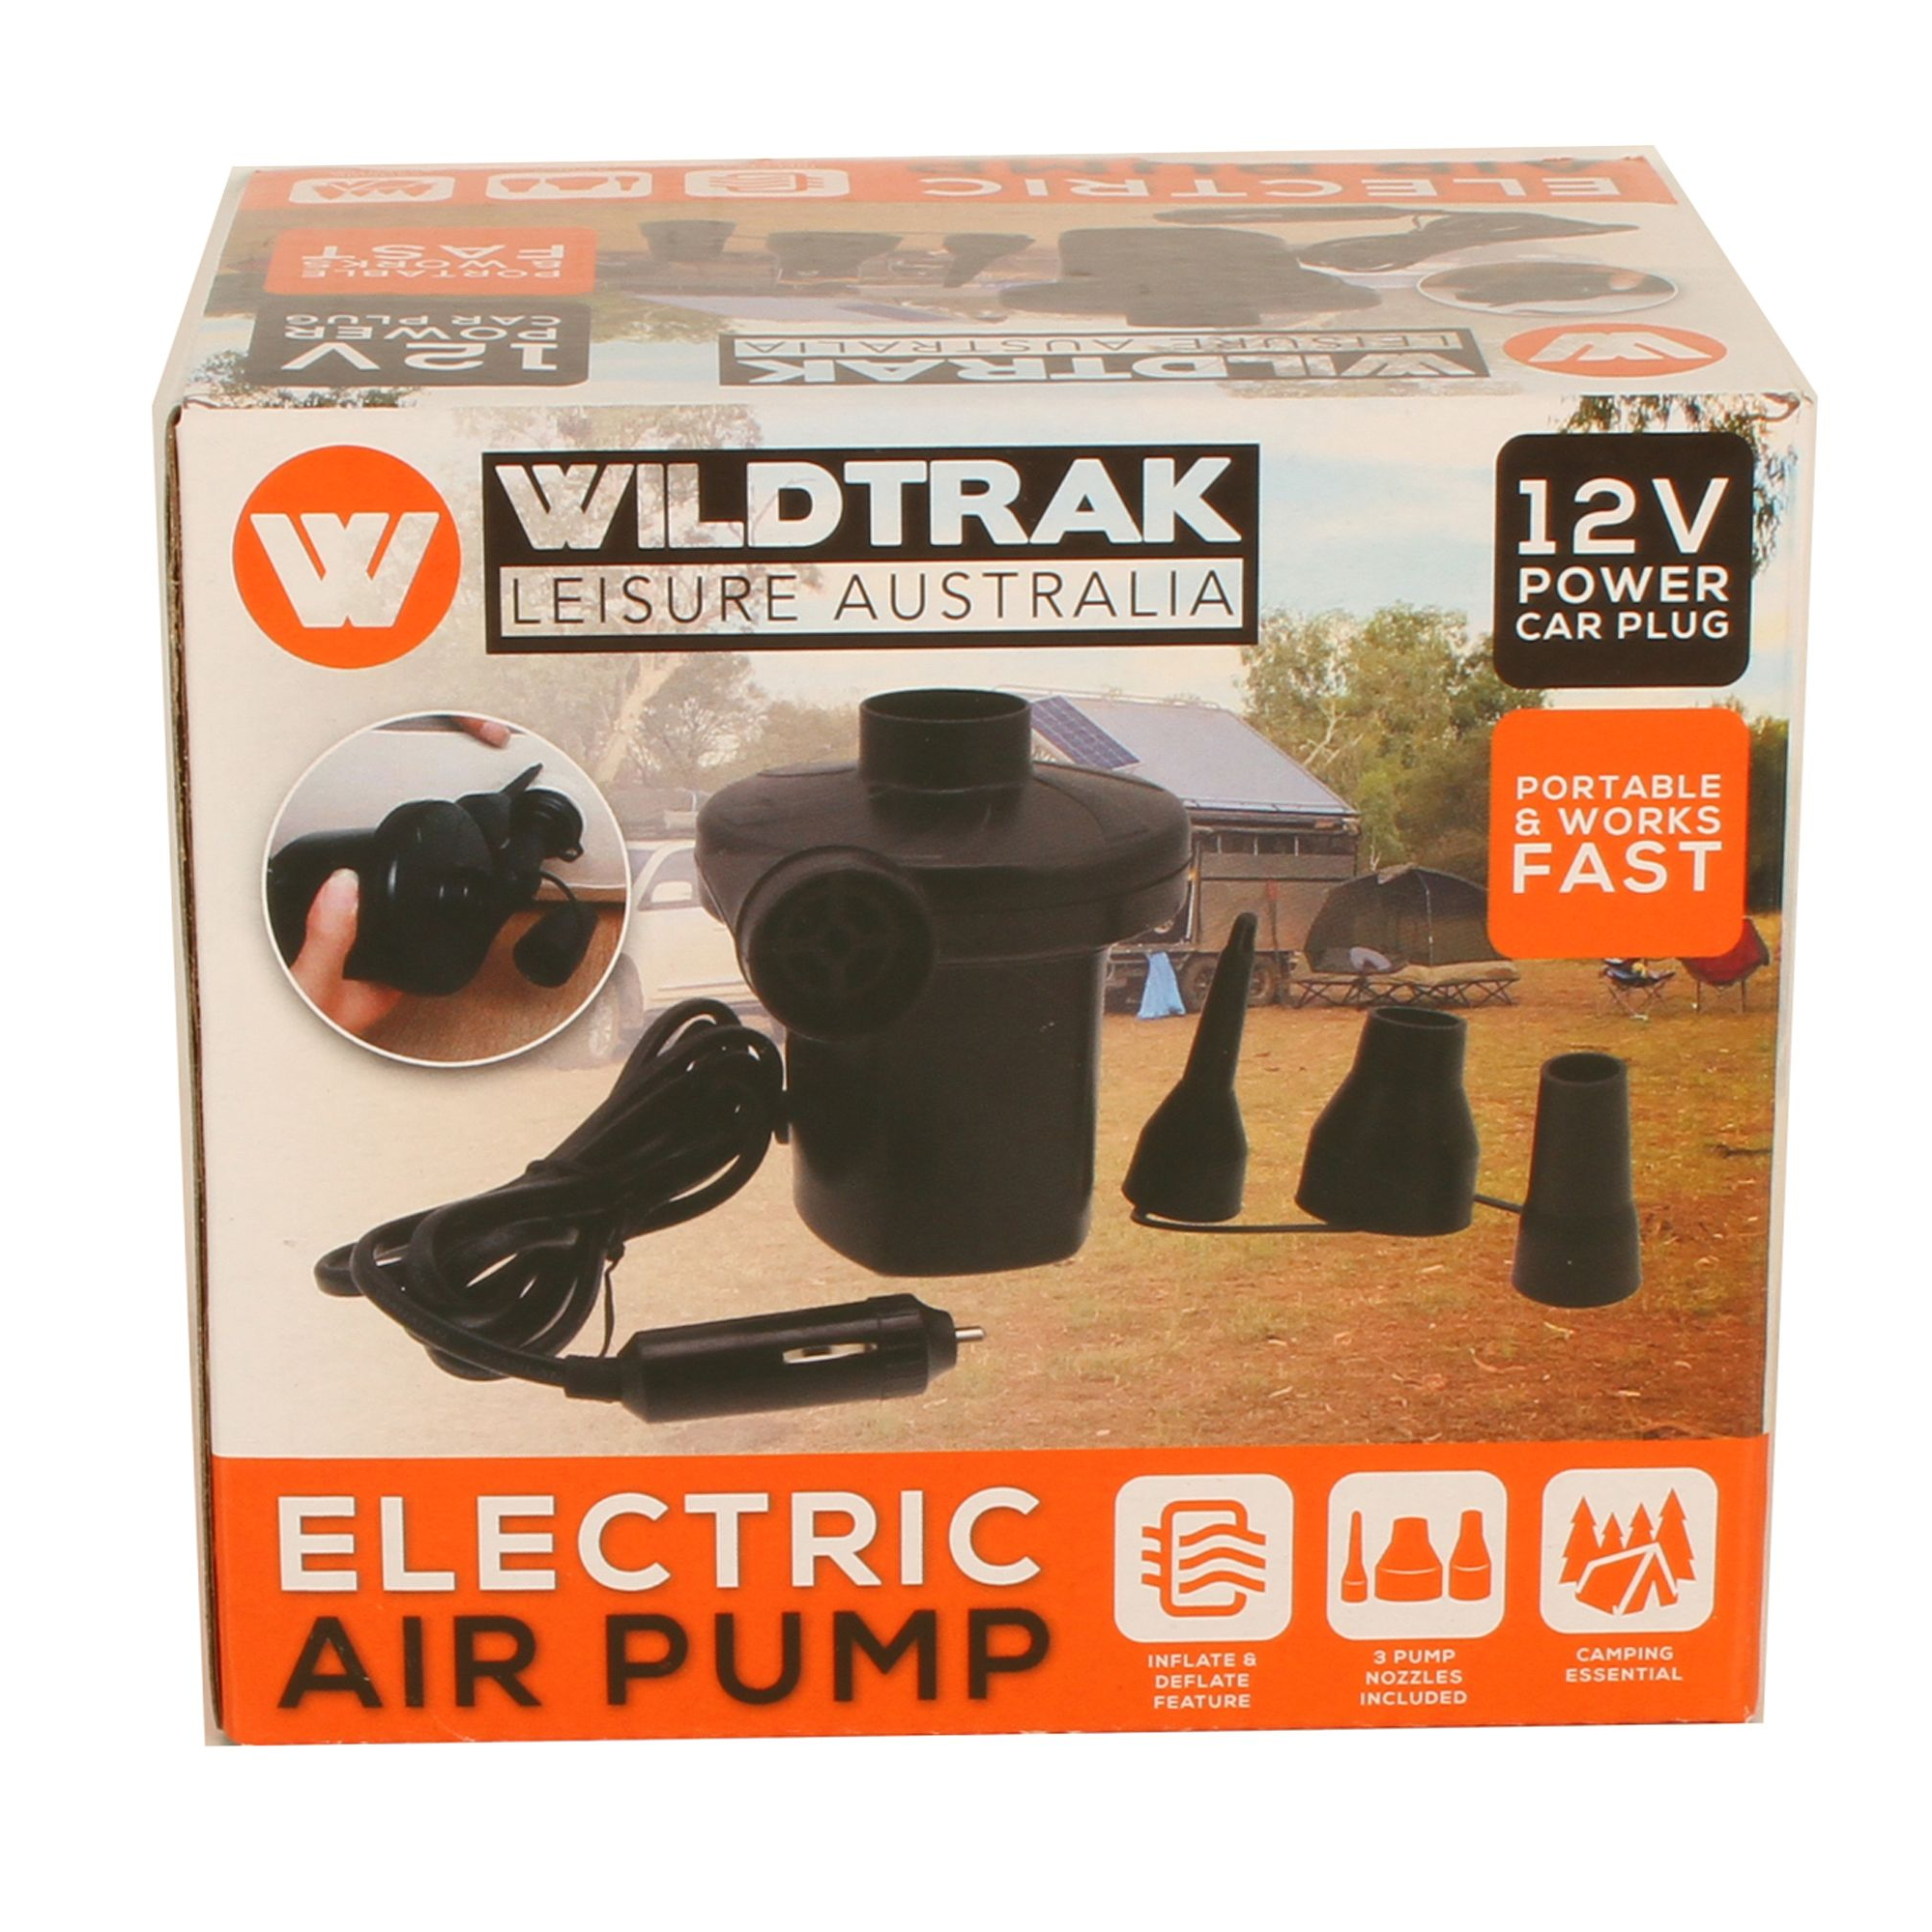 Wildtrak Air Pump 12V